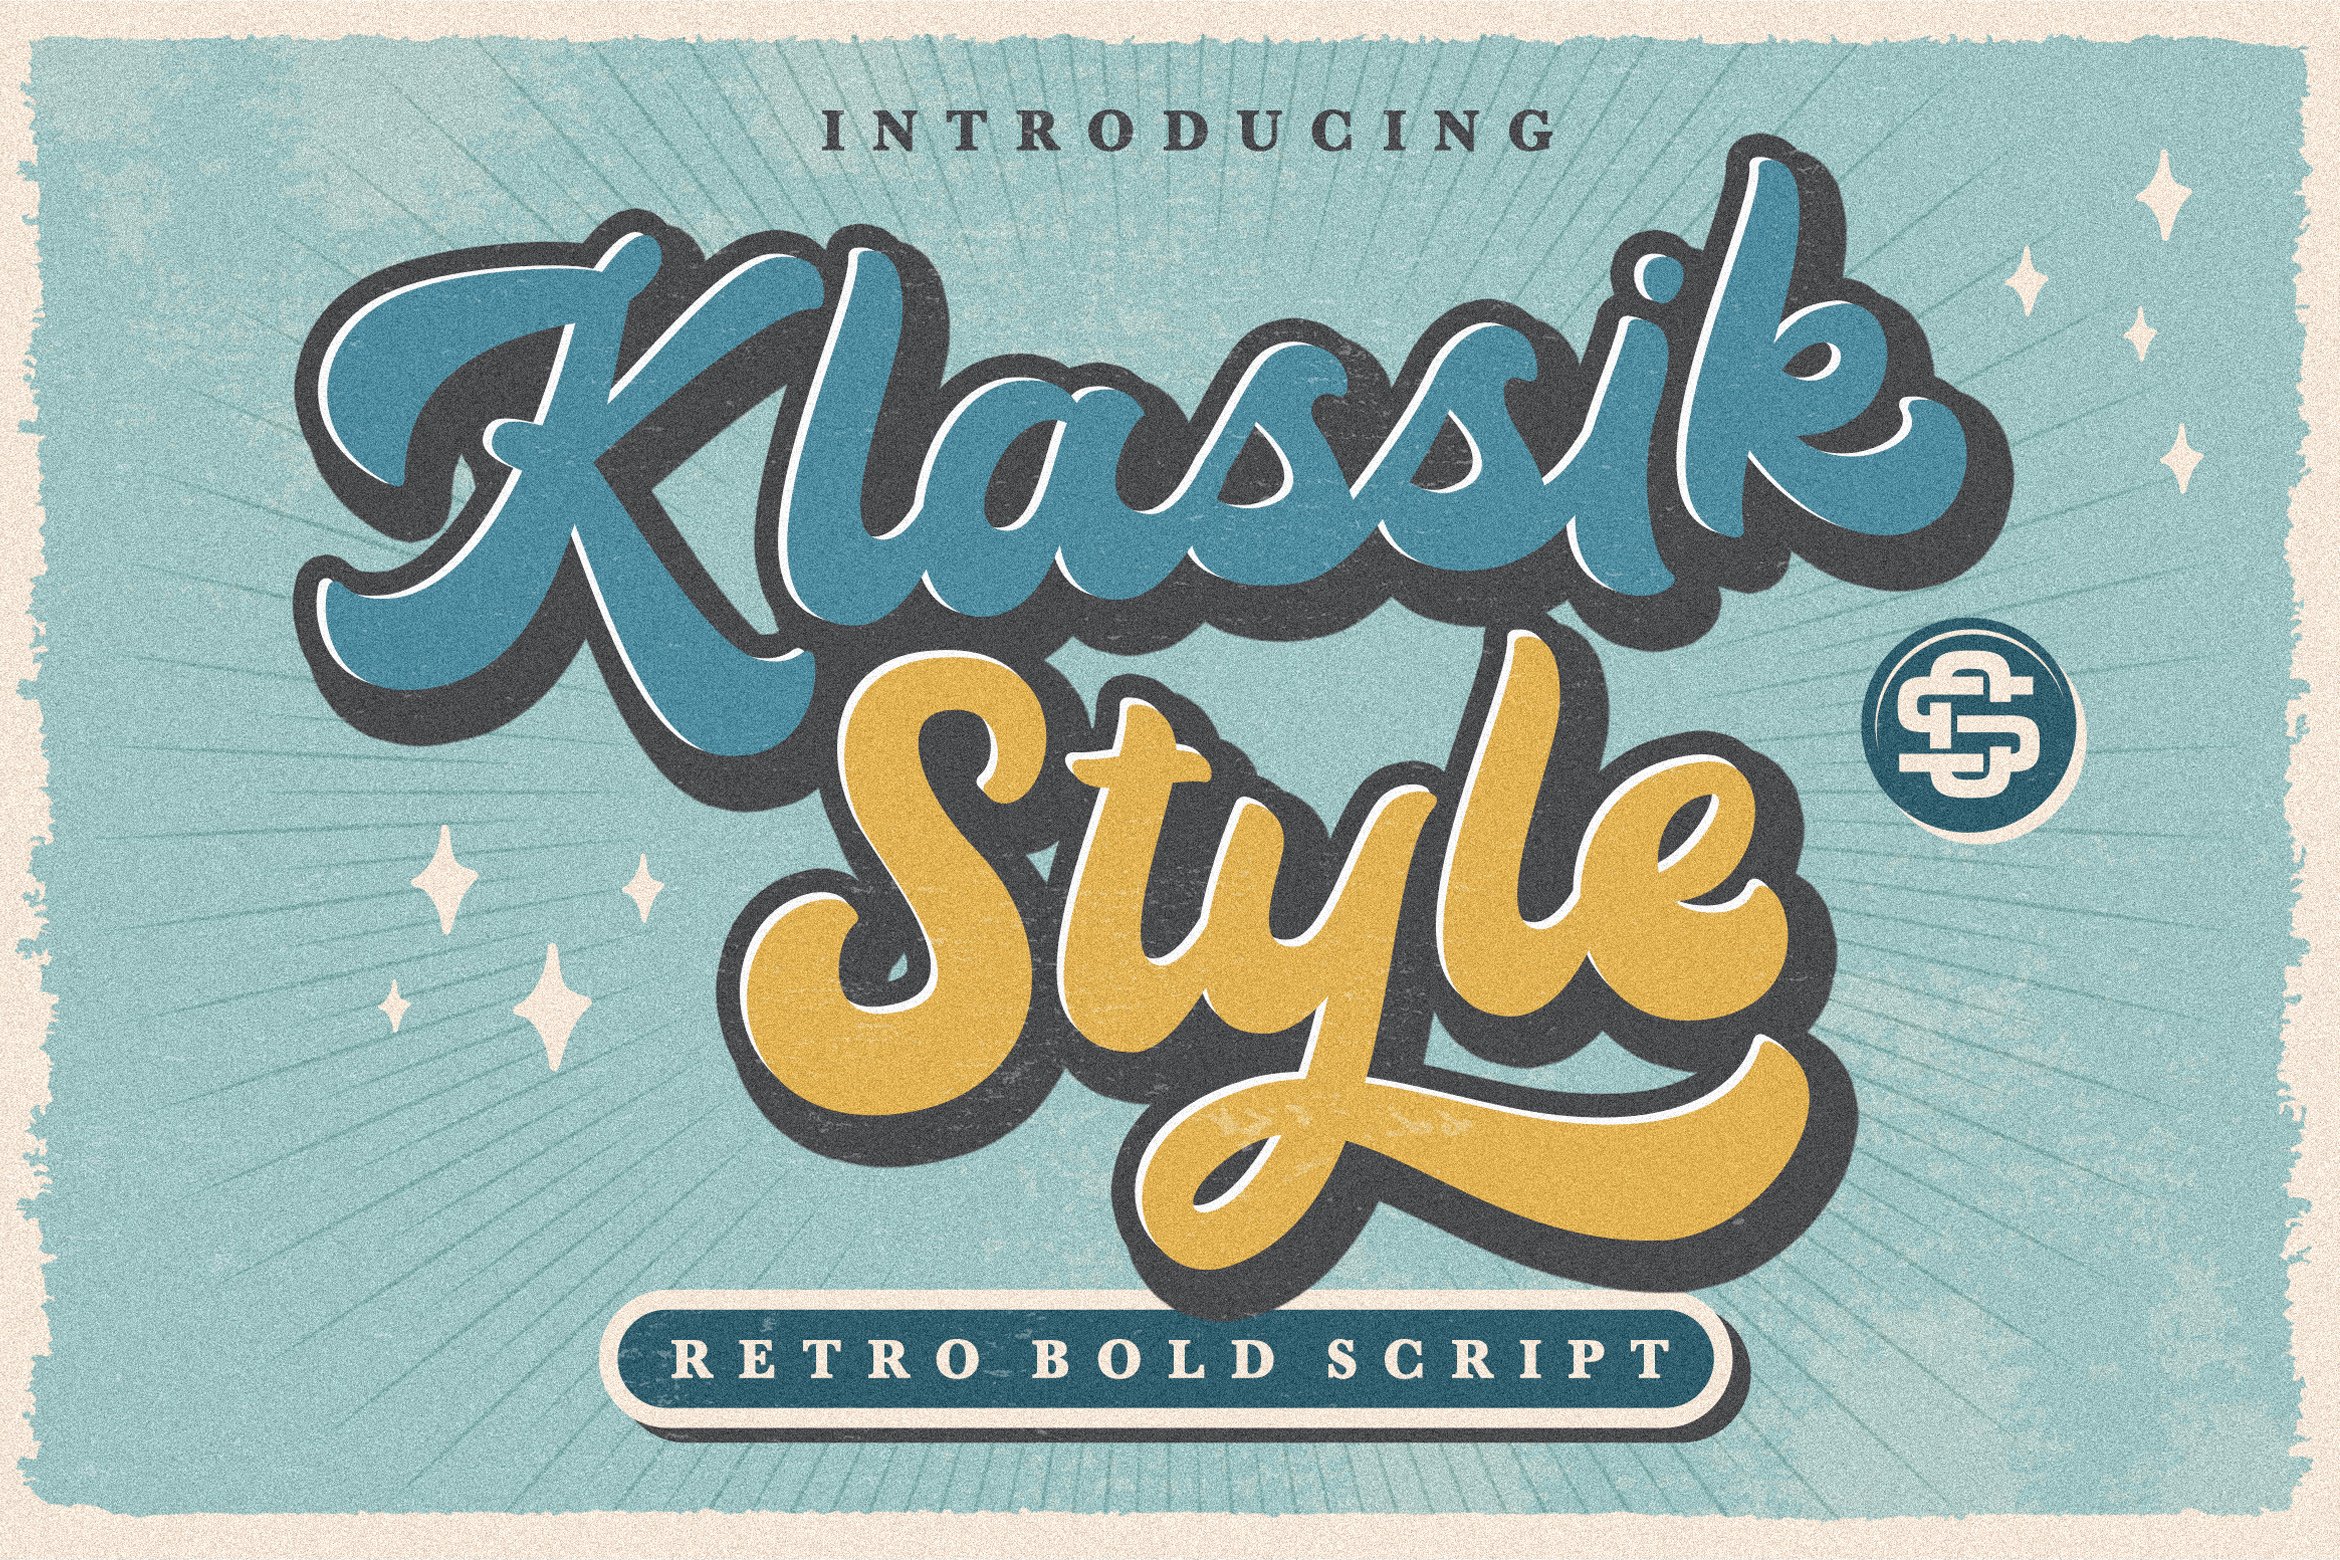 Klassik Style Retro Bold Script cover image.